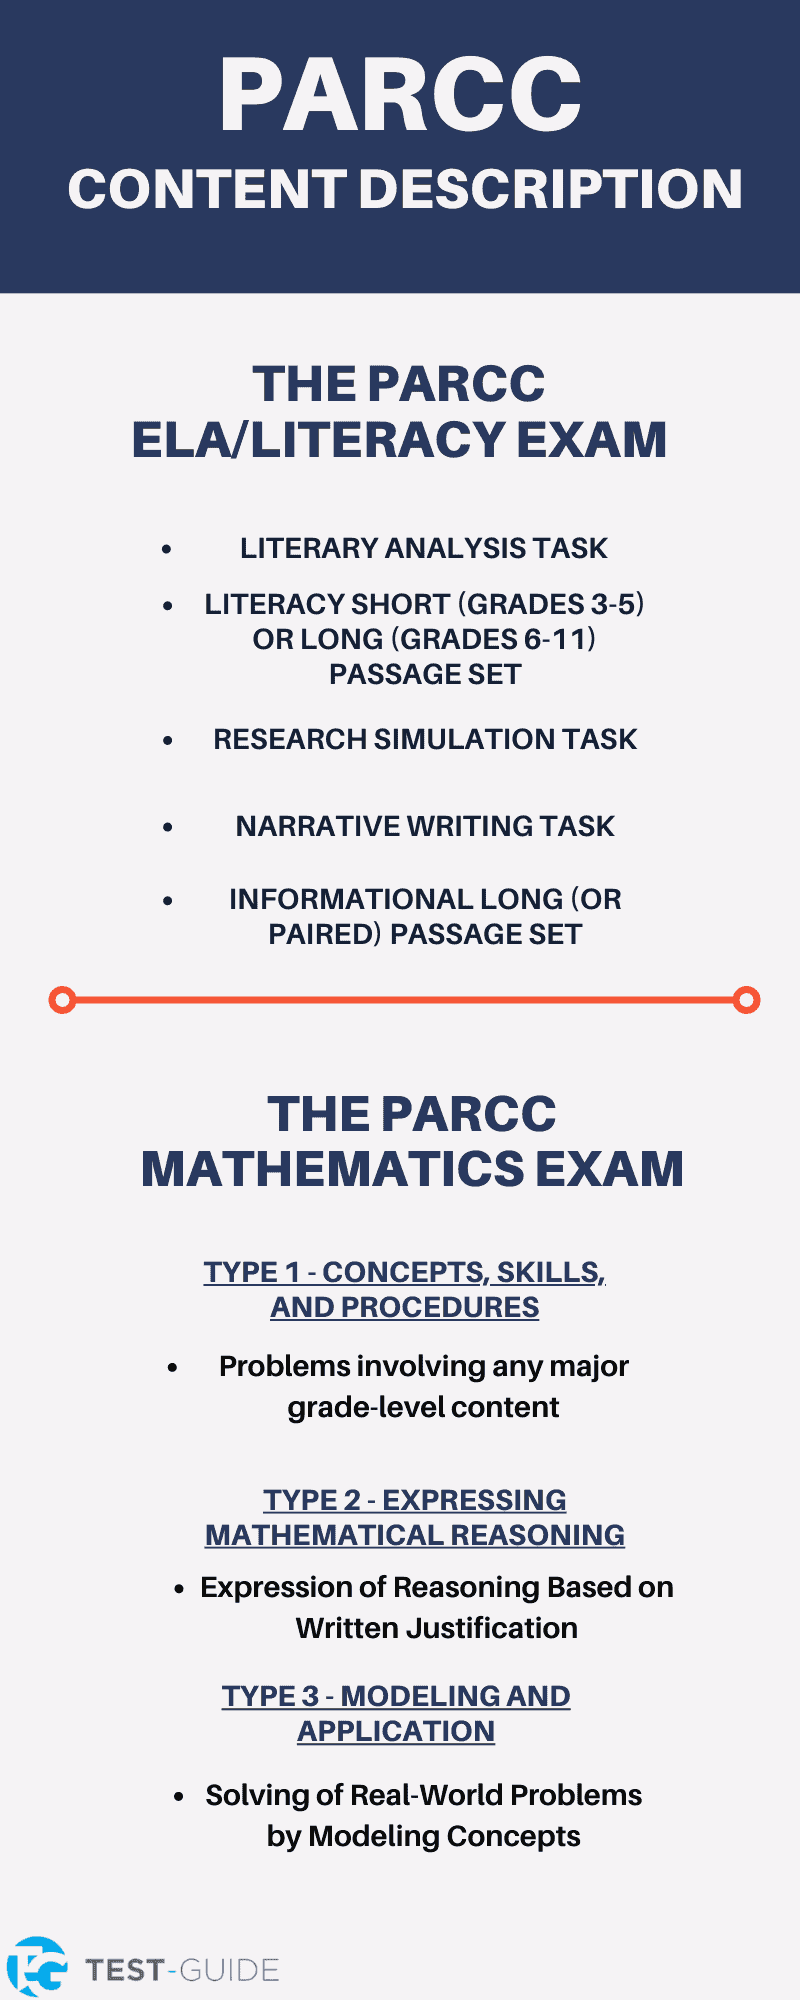 Breakdown of the PARCC Exam